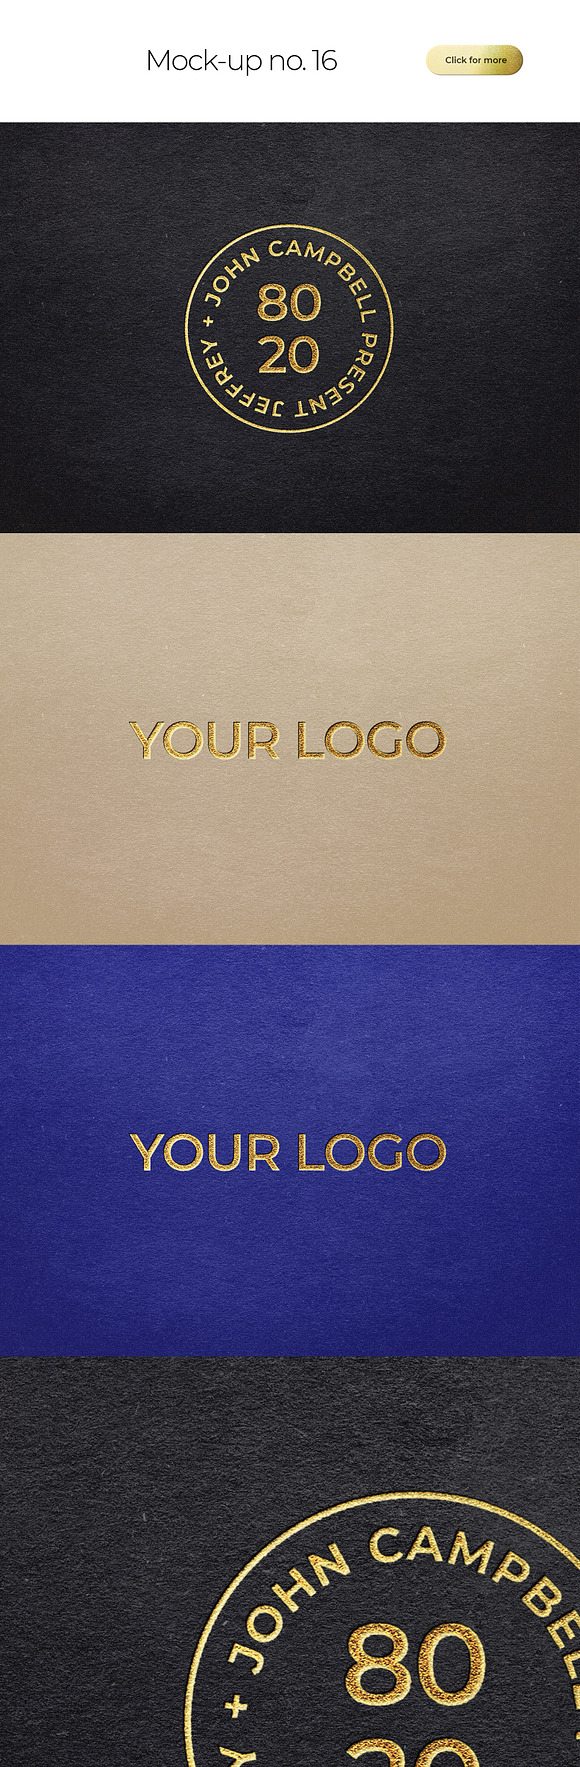 50 logo mockup branding bundle in Branding Mockups - product preview 17